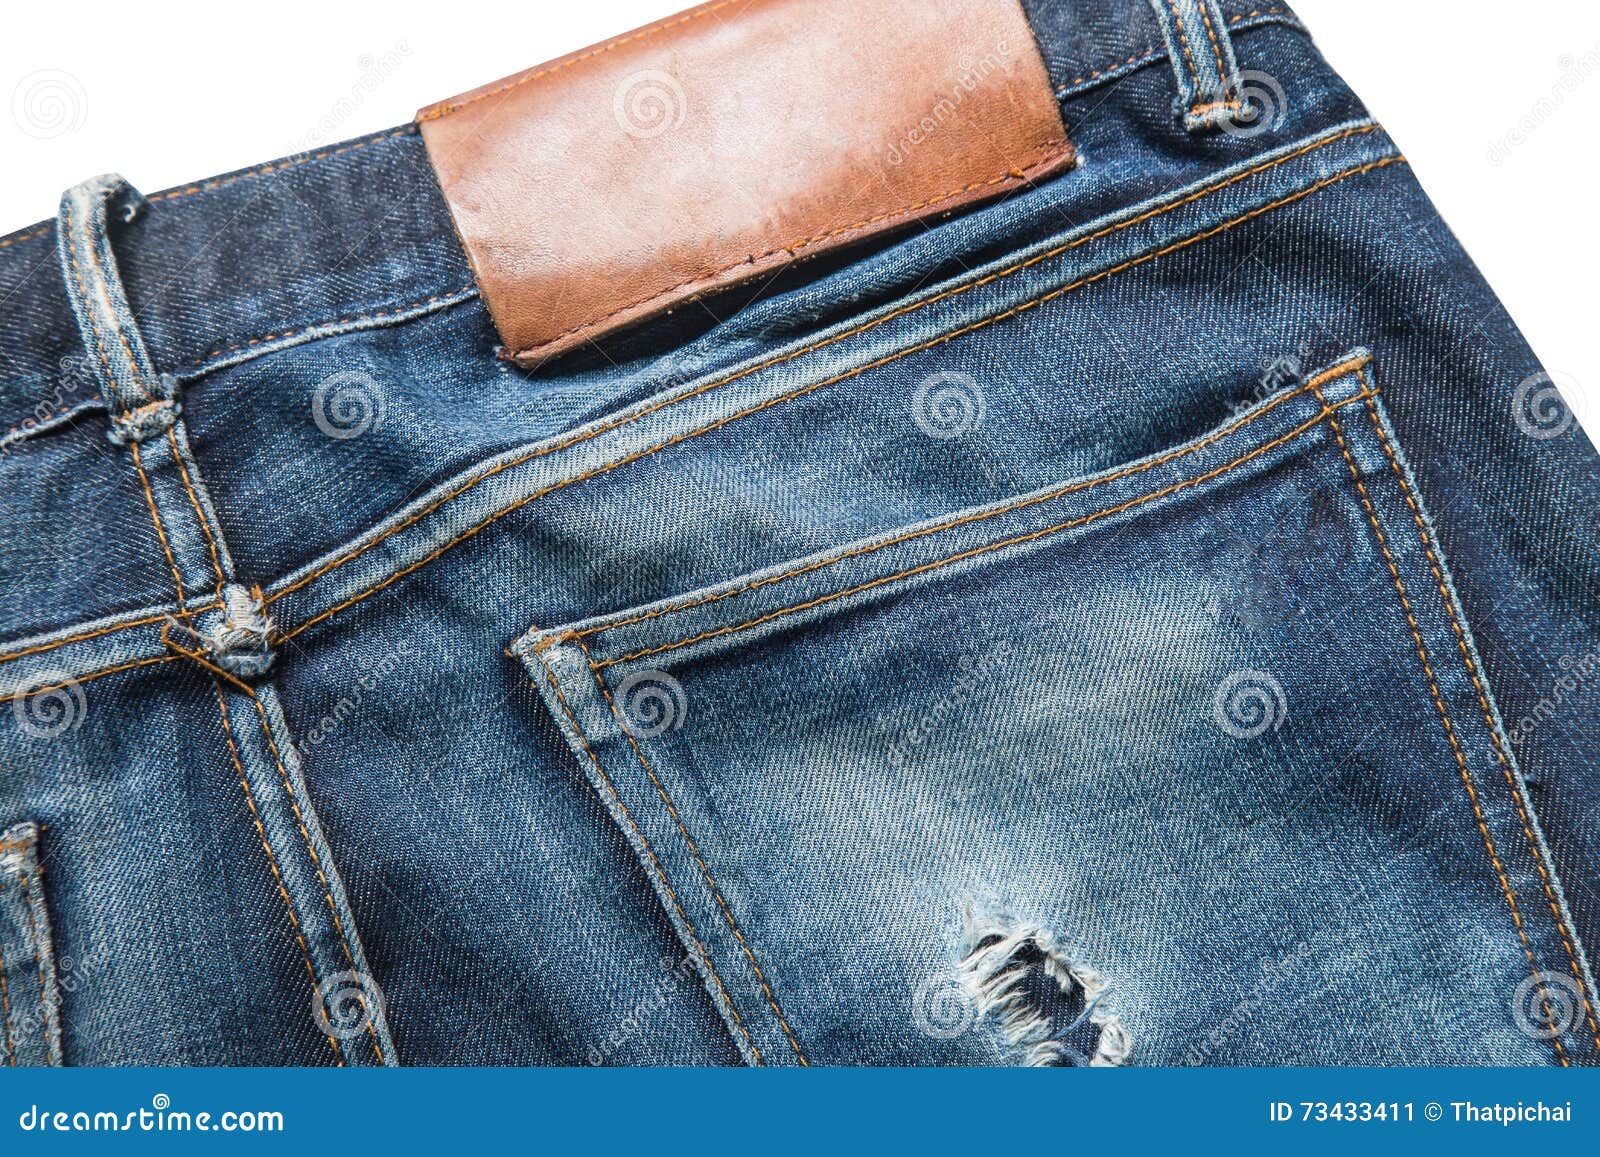 Blue Denim Jeans Isolated On White Background Stock Image - Image of ...